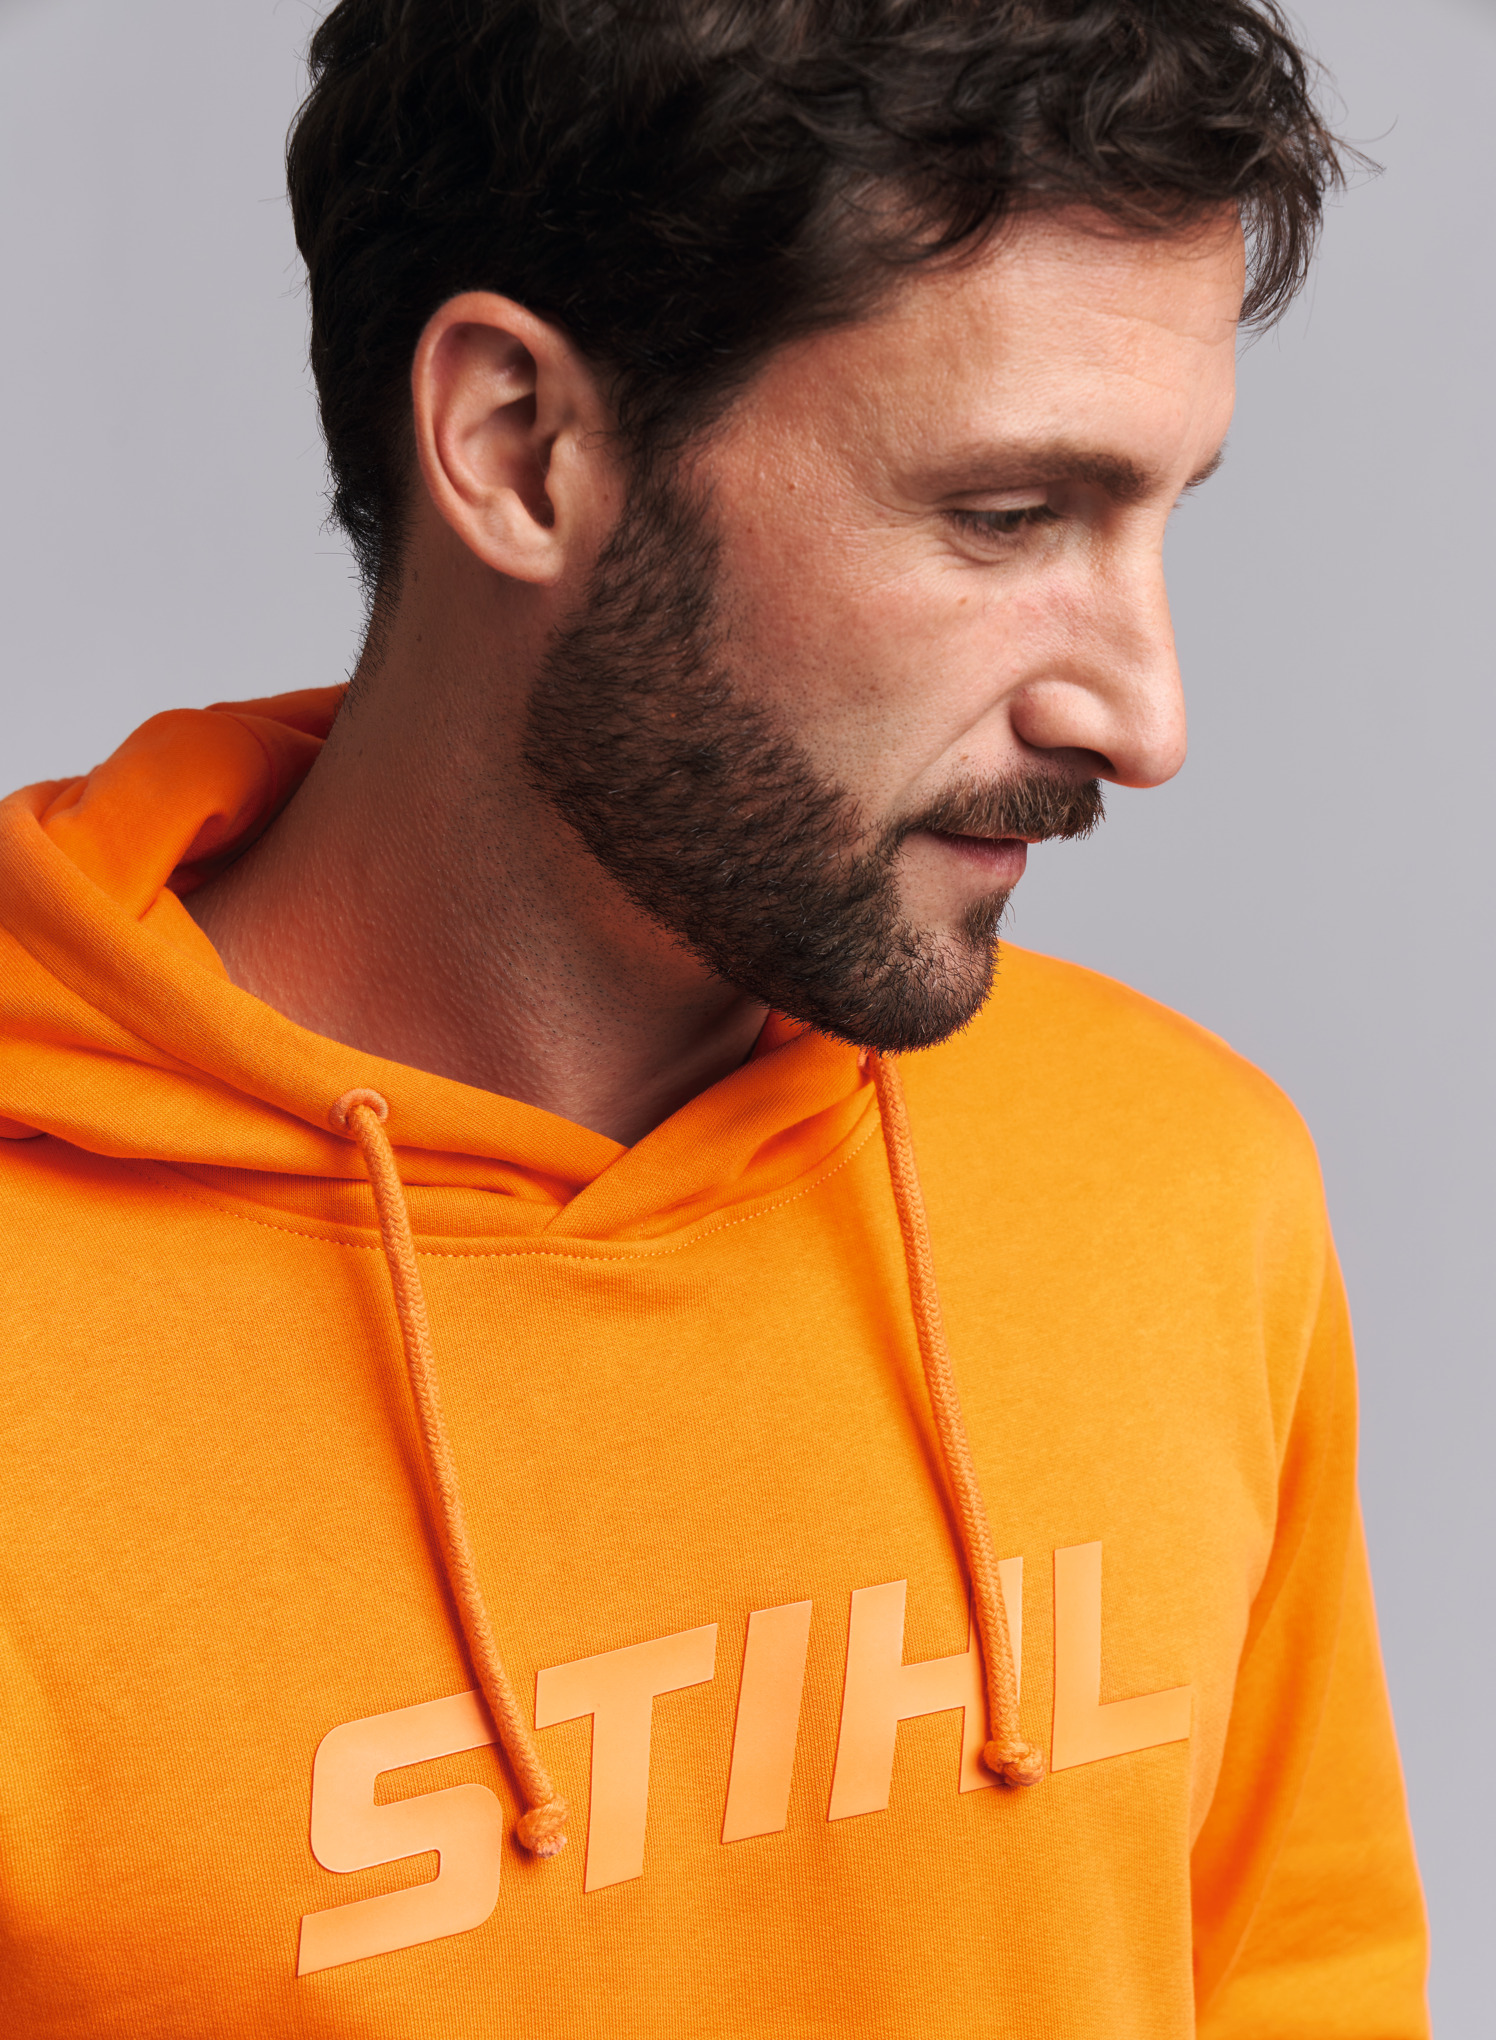 Orange STIHL hoodie - Adults